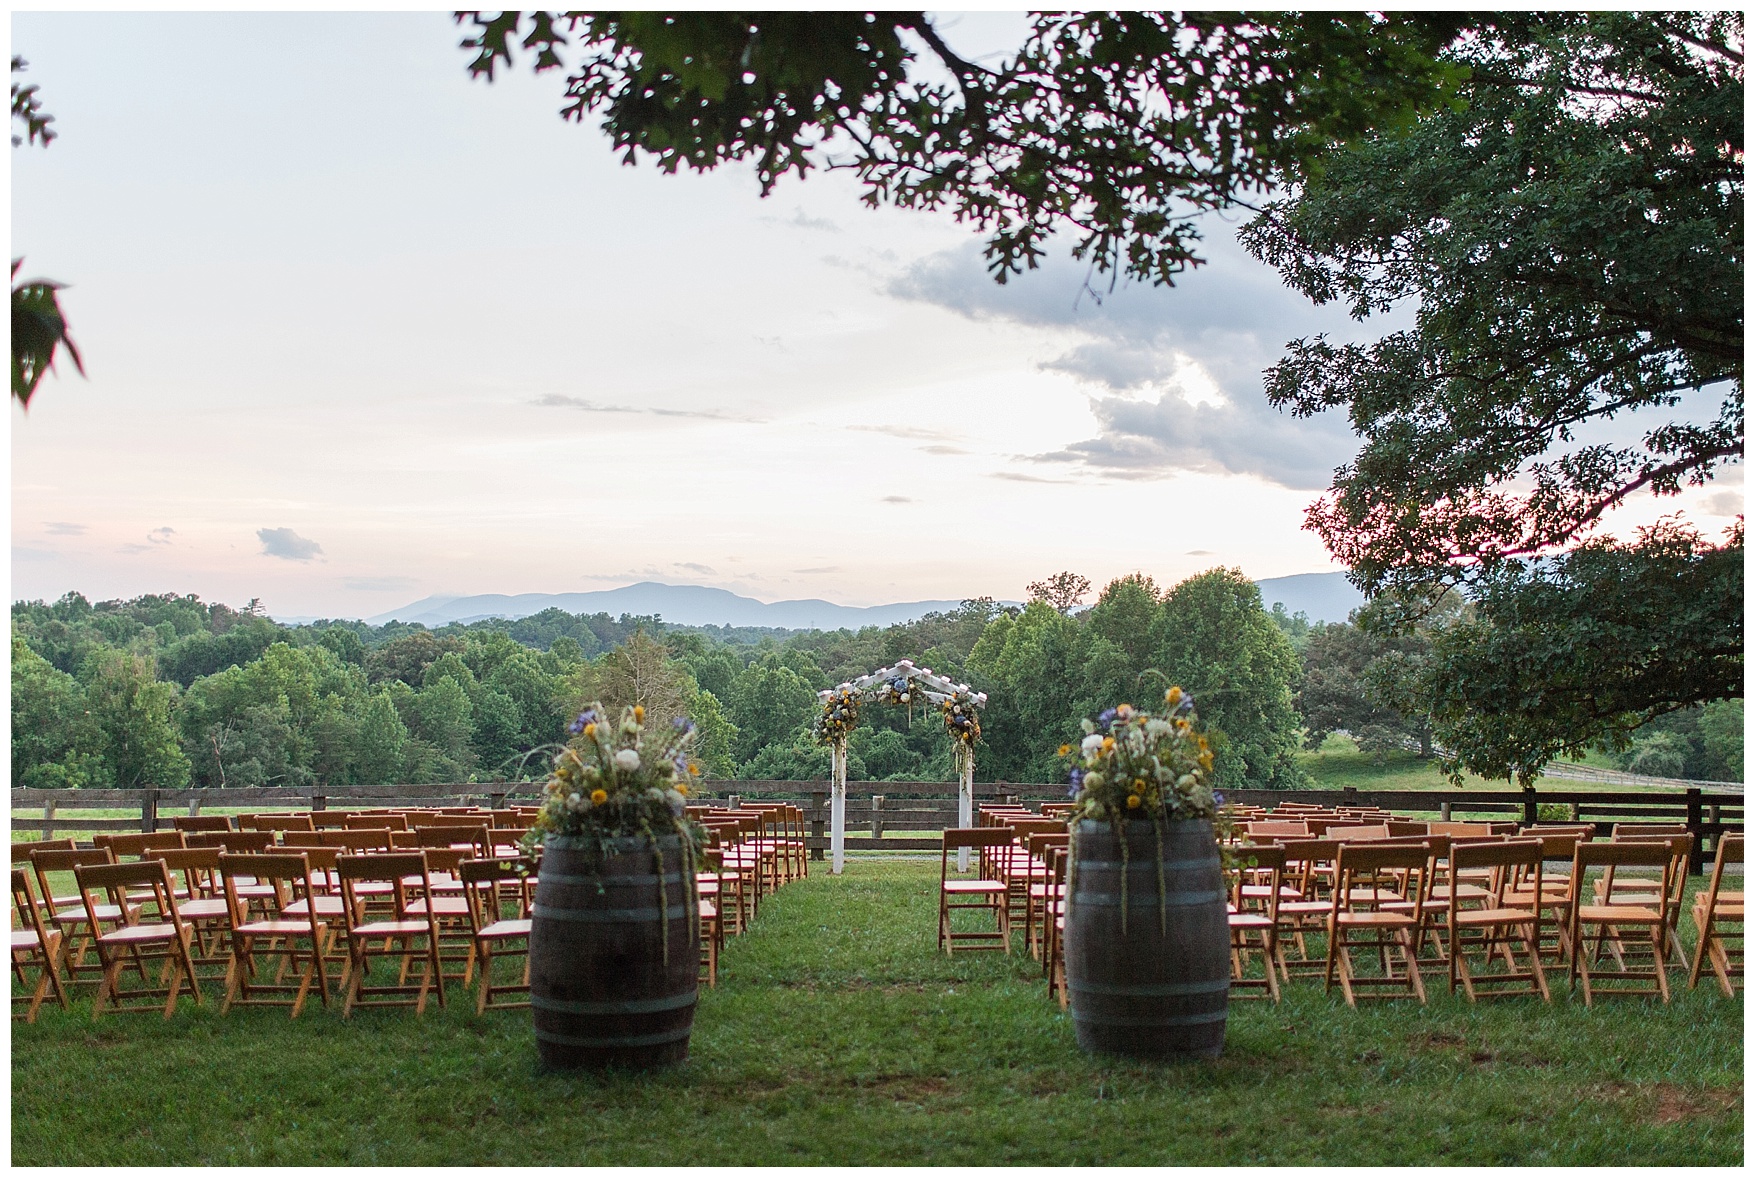 Knight’s Gambit Vineyard Wedding in Charlottesville, Virginia || Central VA Winery Wedding Photographer